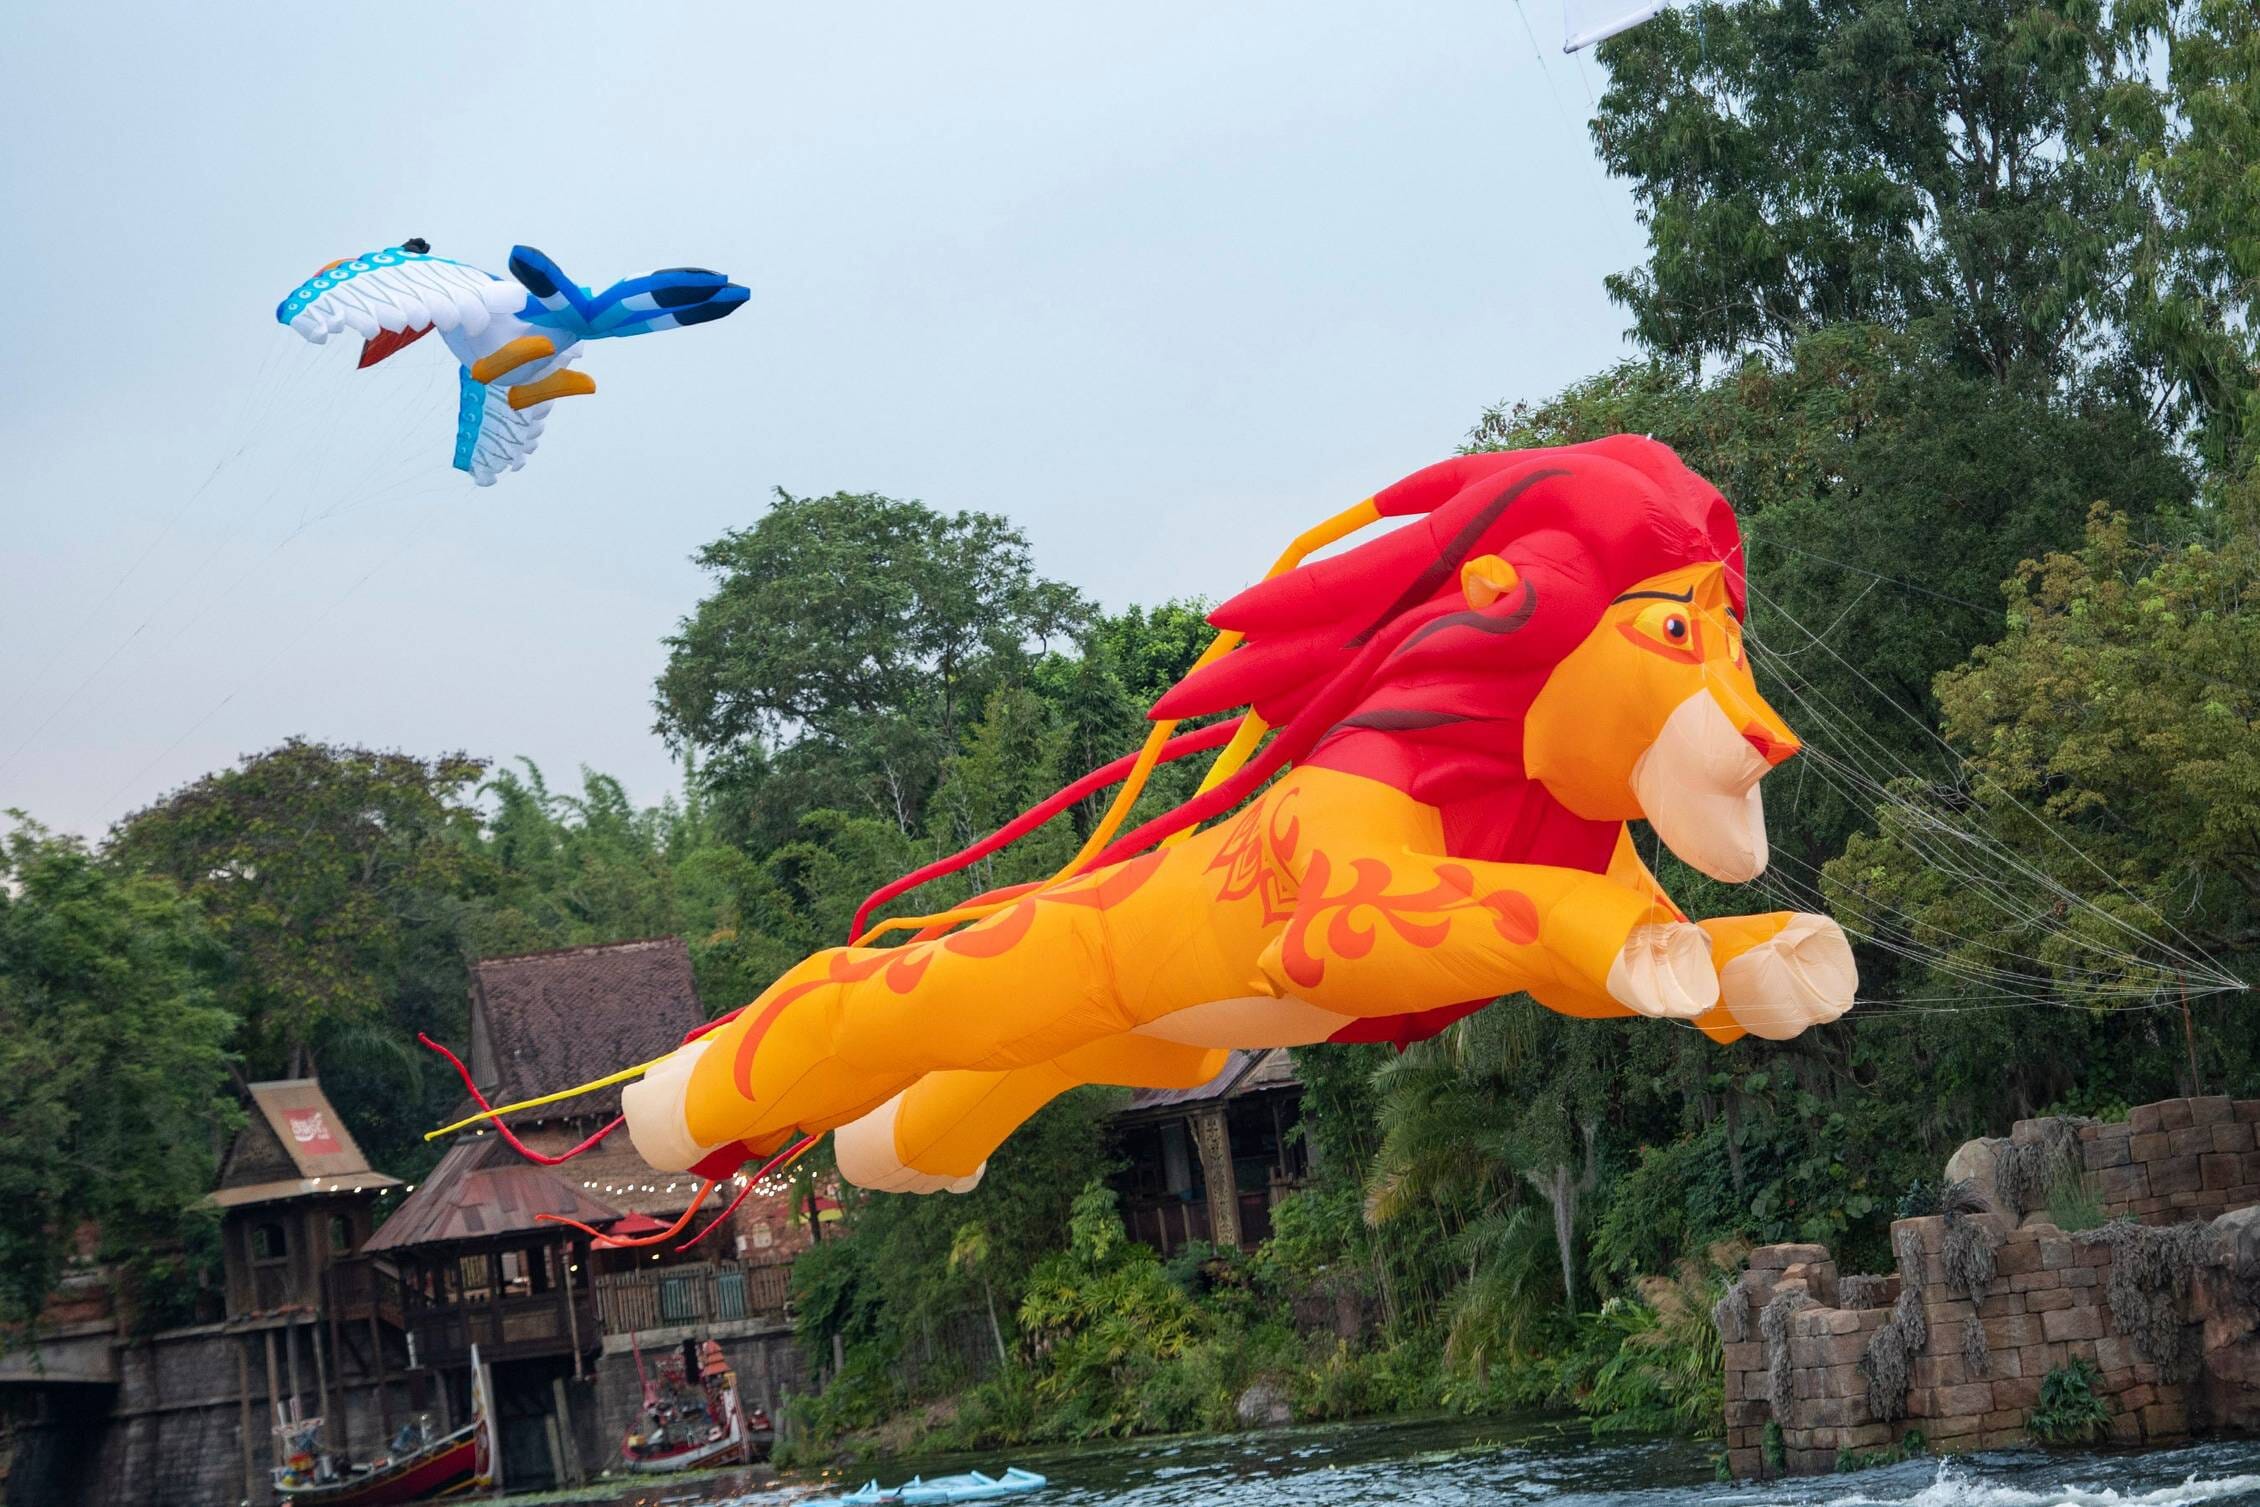 Disney KiteTails at Disney's Animal Kingdom